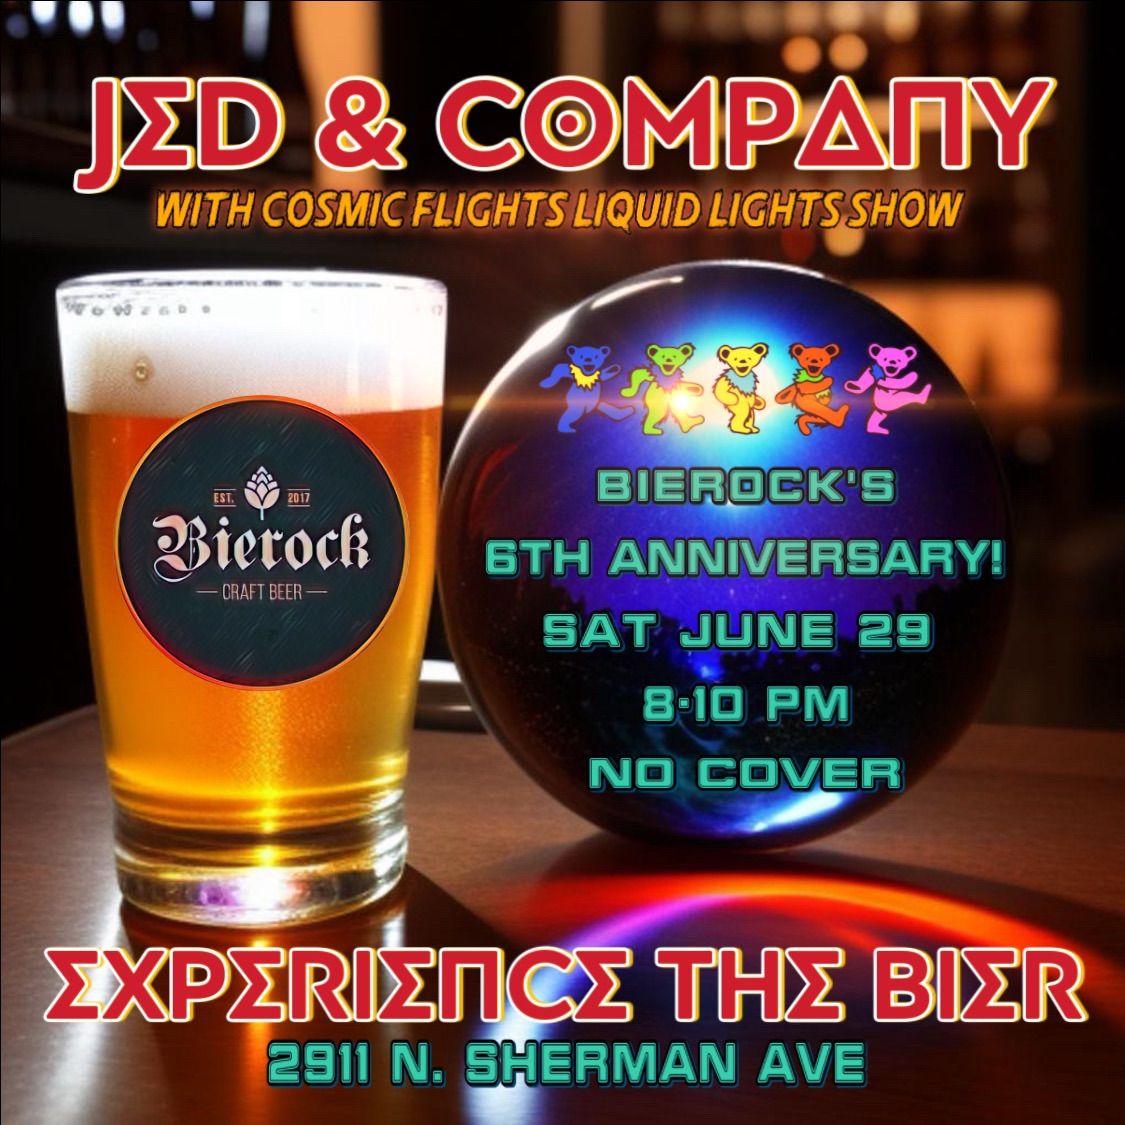 Jed & Company at the Bier! Bierock\u2019s 6th Anniversary